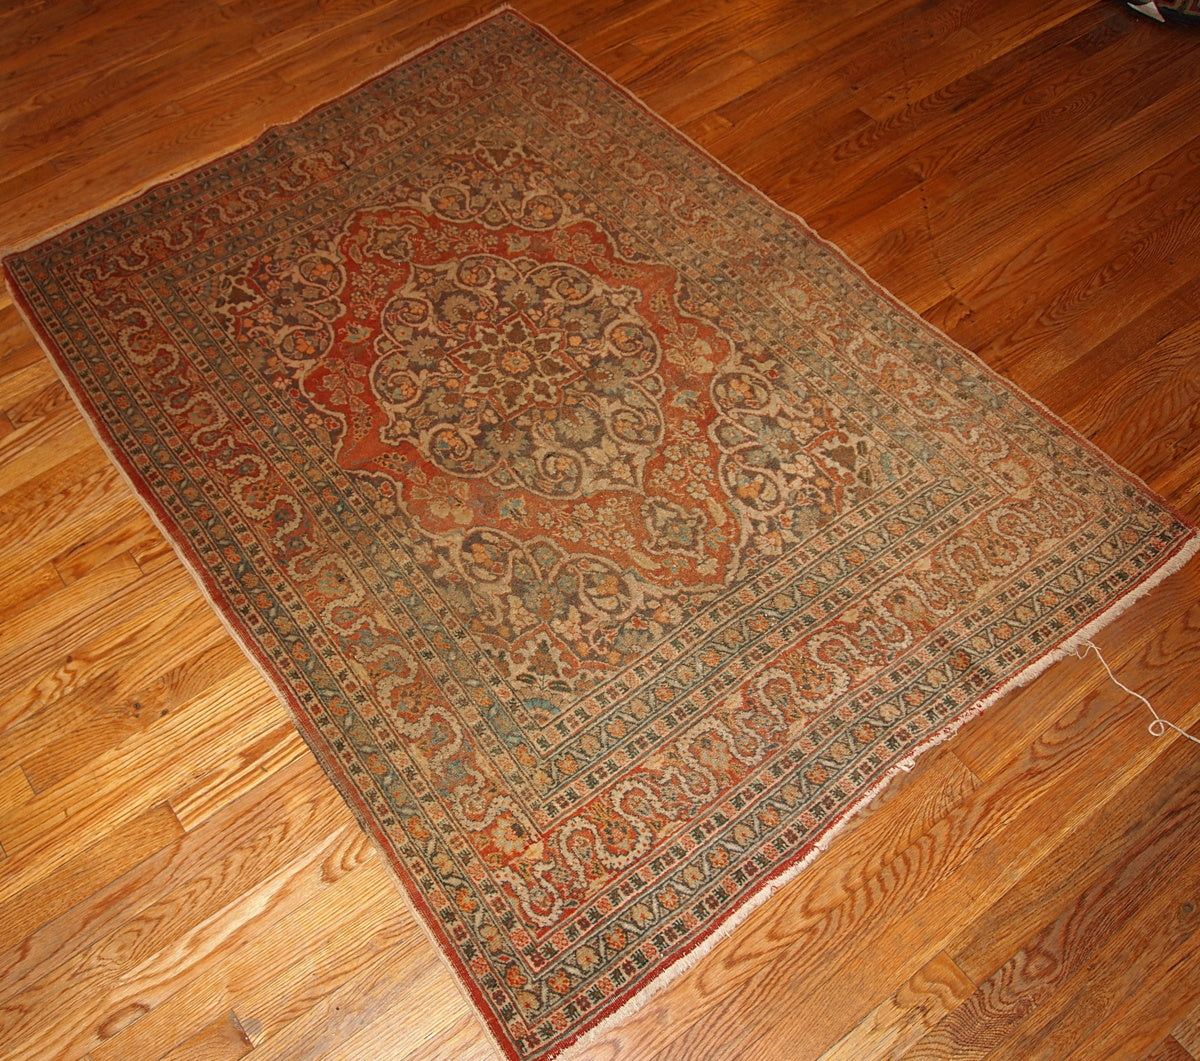 Handmade antique Persian Tabriz rug 4.2' x 5.9' (128cm x 179cm) 1920s - 1B154